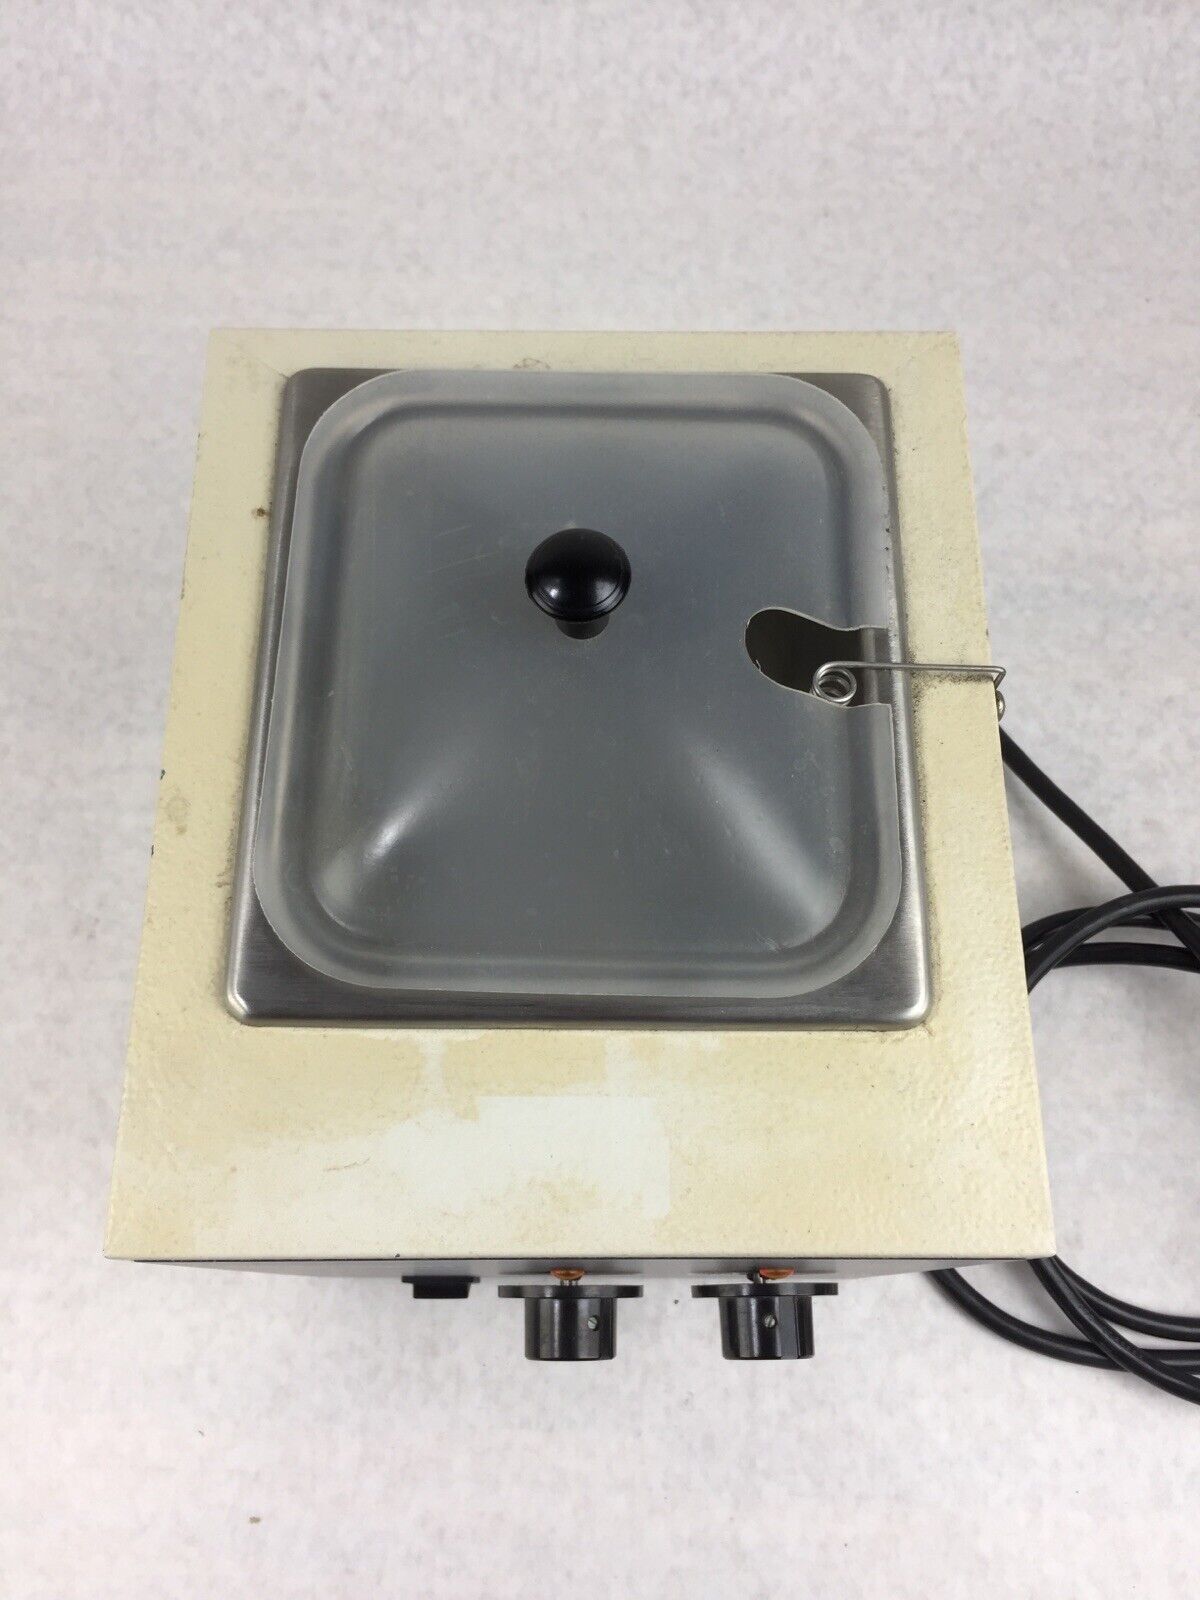 Precision Scientiic 66557 180 Series Heated Water Bath 51220064, 1.5L, 5-100° C